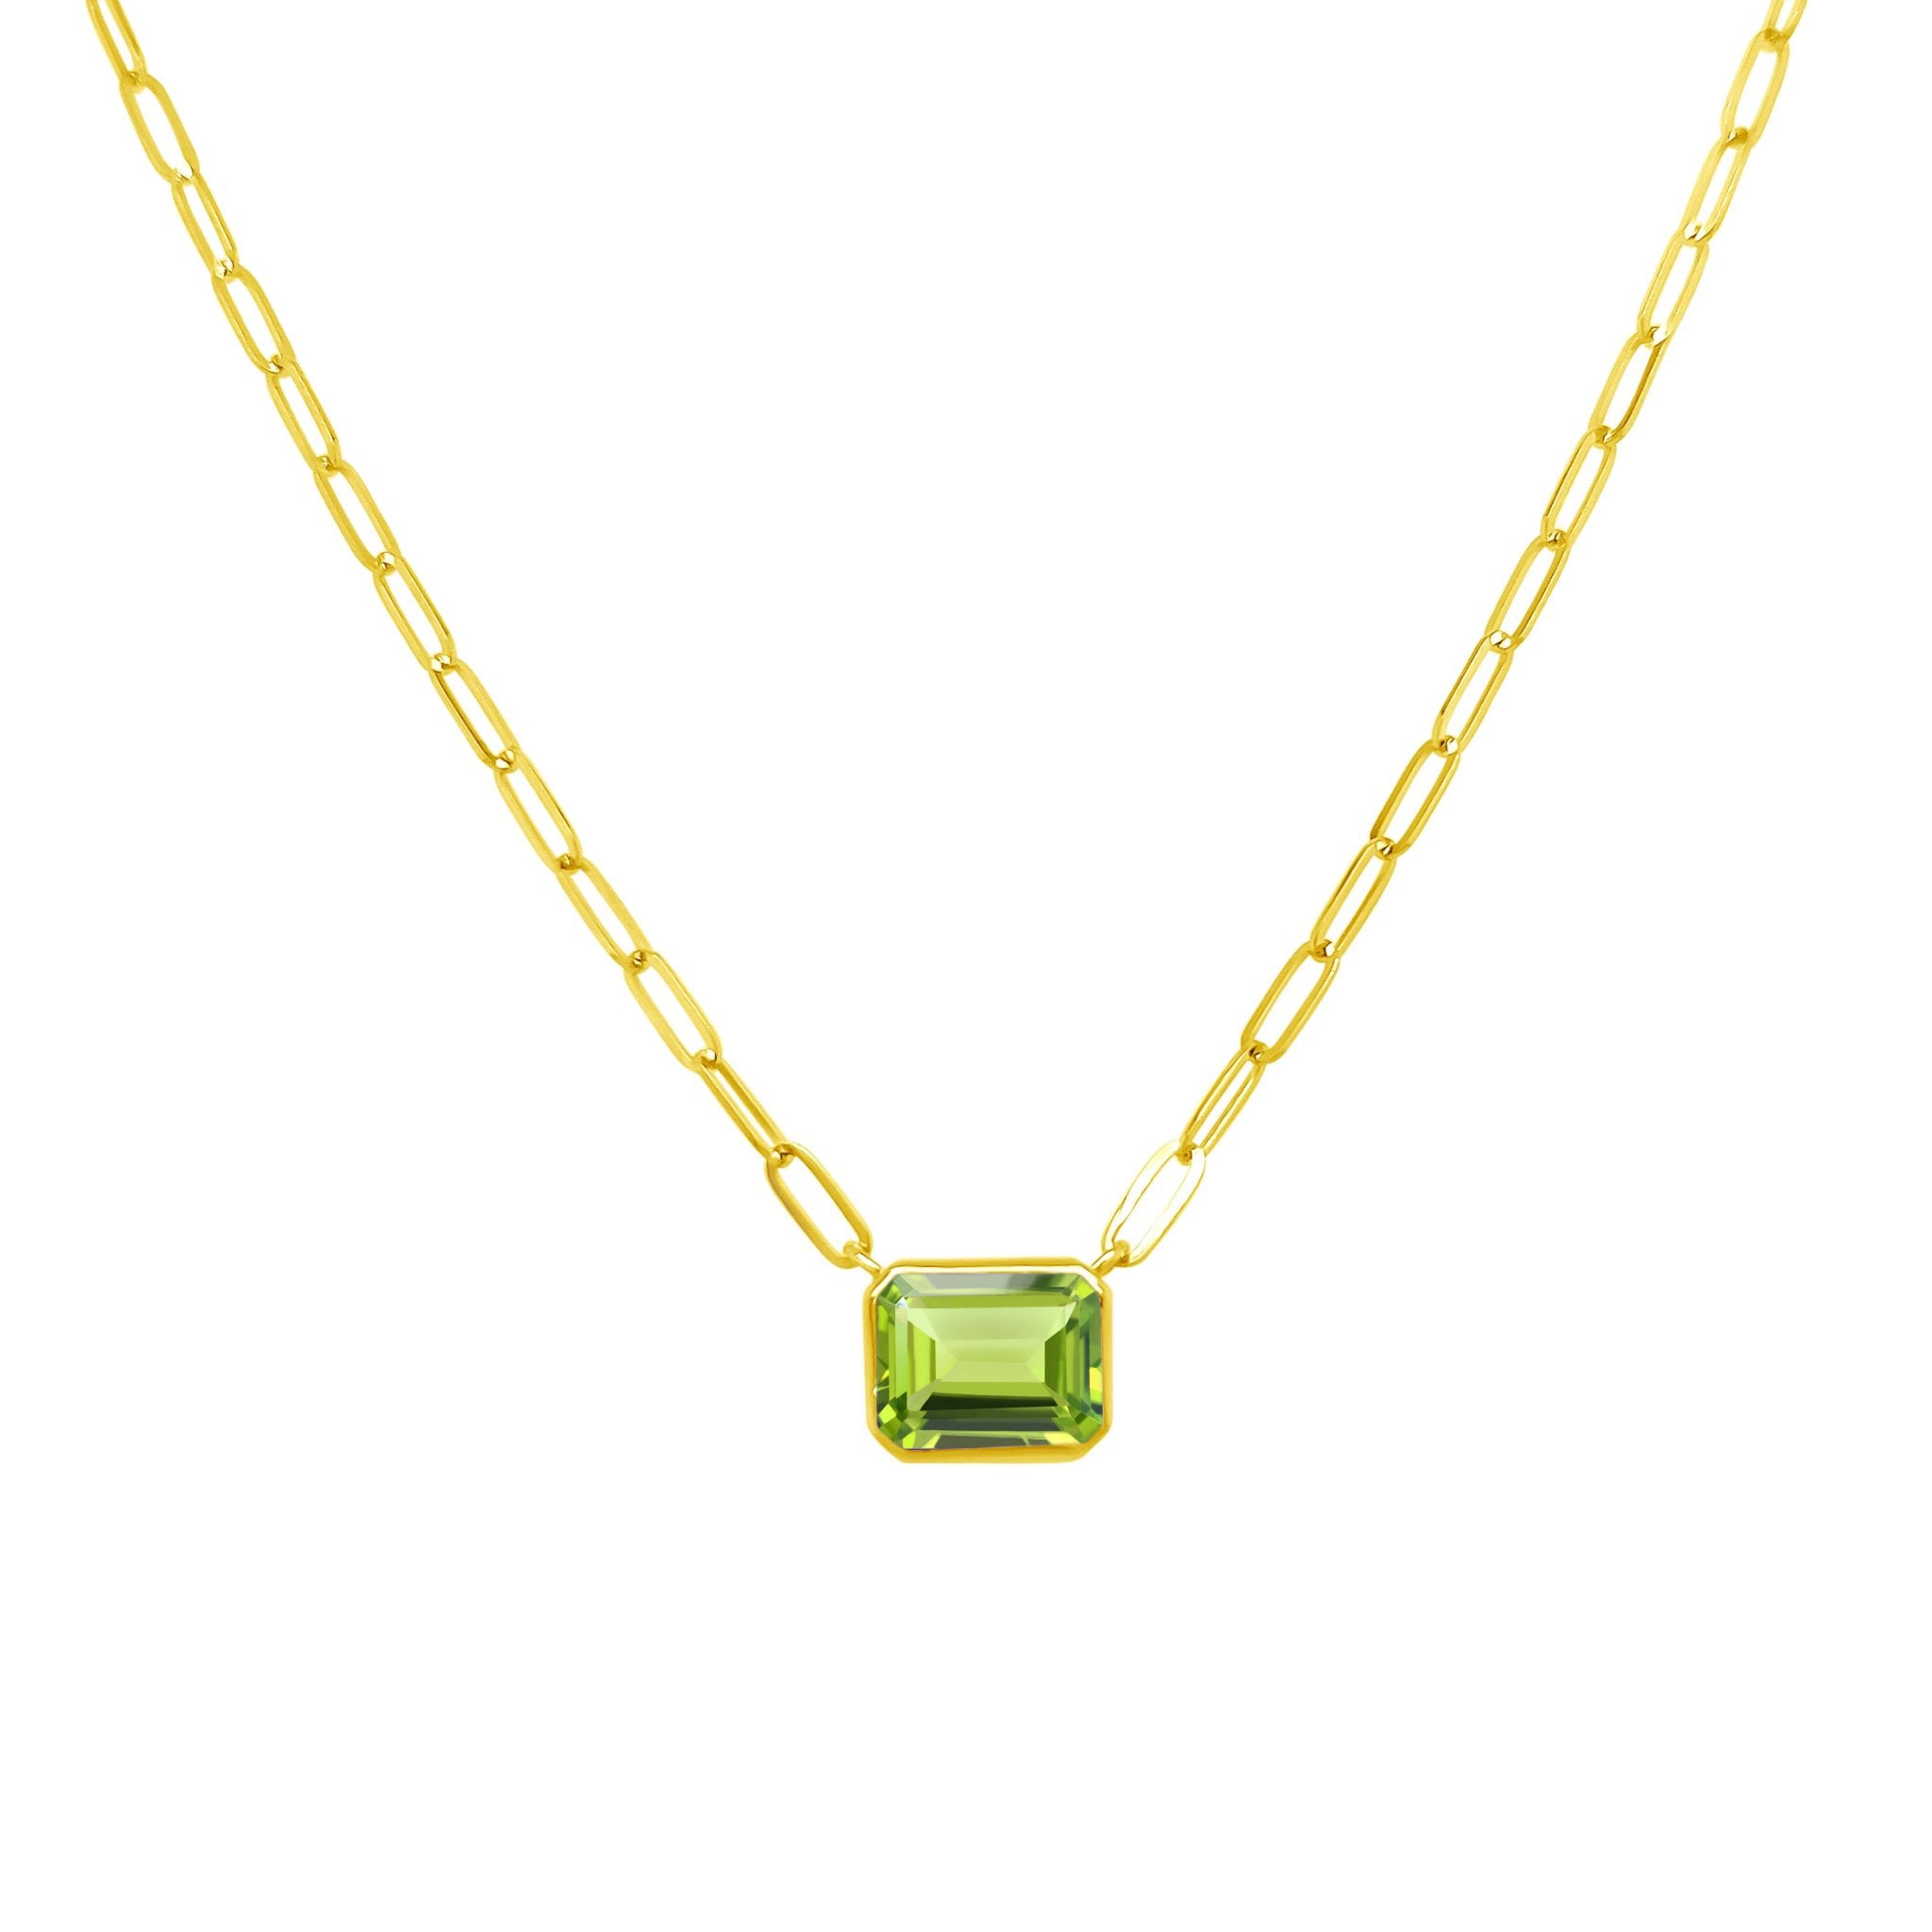 Classic Black onyx drop pendant gemstone necklace set at ₹7950 | Azilaa